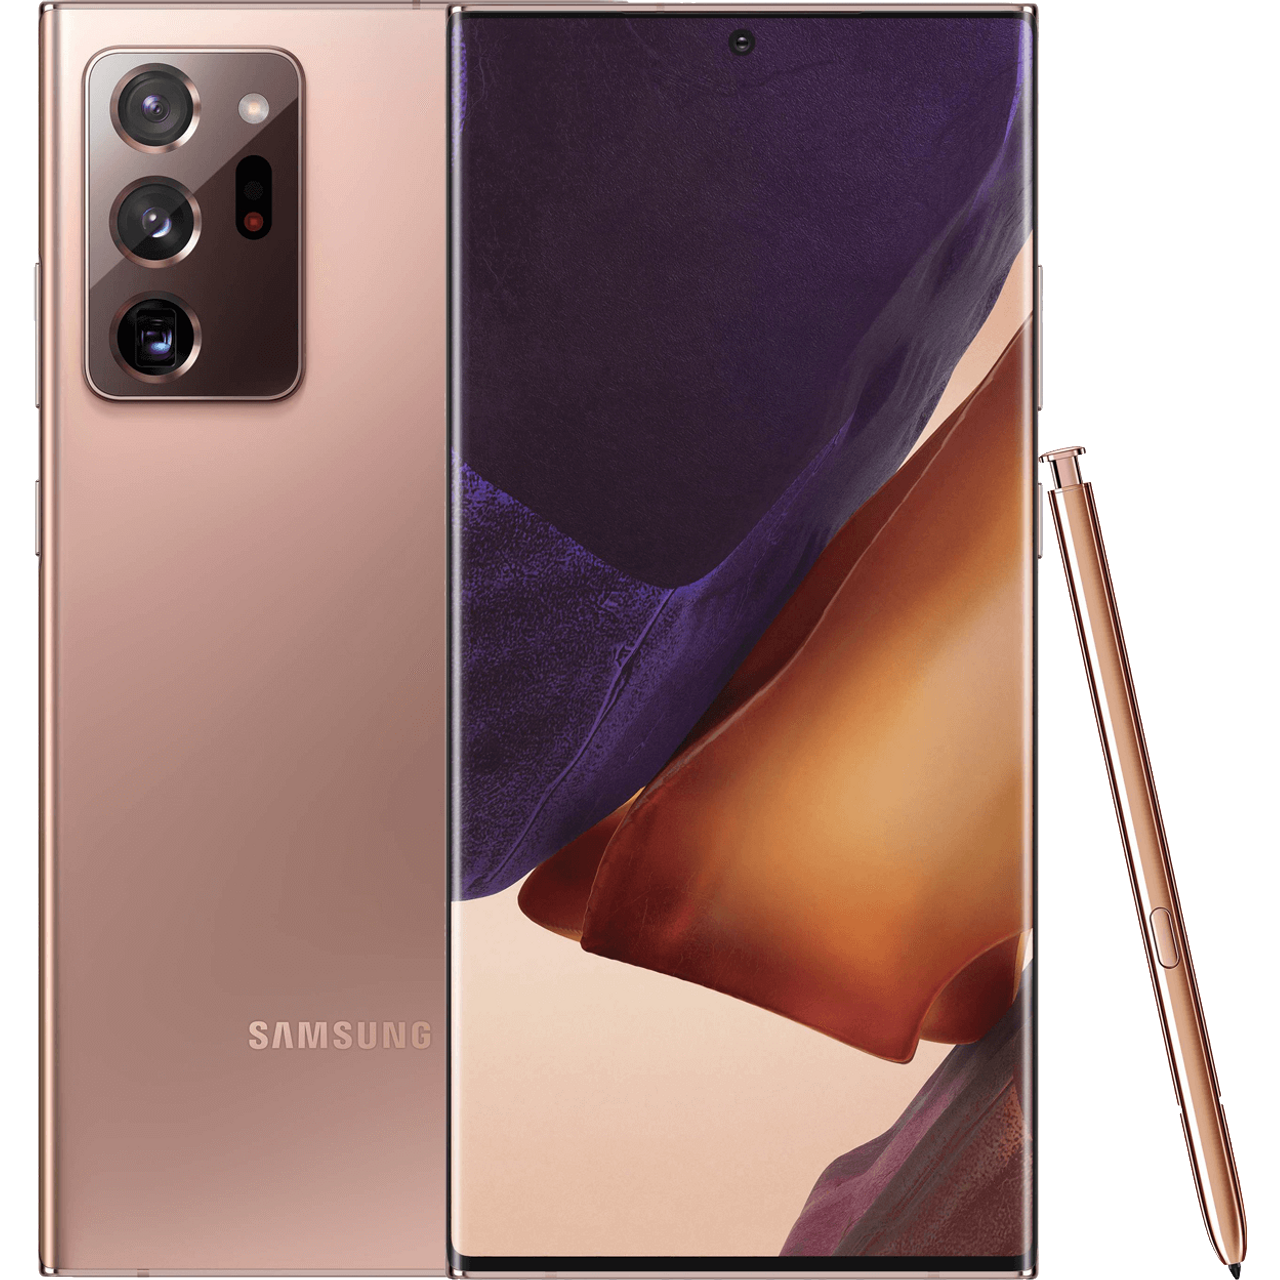 Samsung Galaxy Note20 Ultra 5G 512GB Smartphone in Mystic Bronze Review